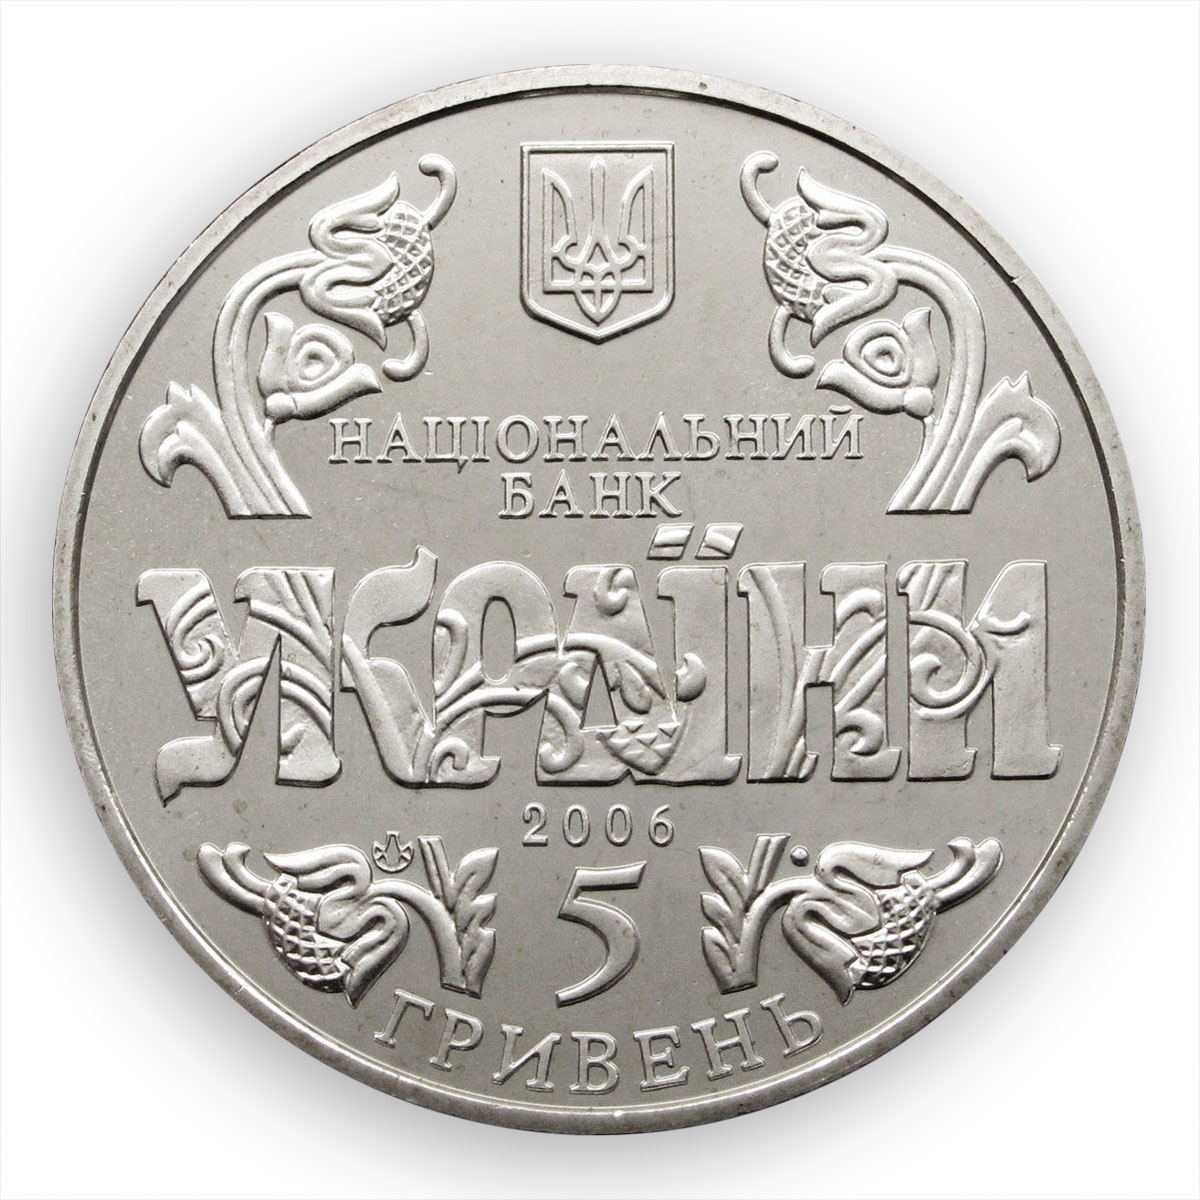 Ukraine 5 hryvnia 10th anniversary of Constitution of Ukraine nickel coin 2006